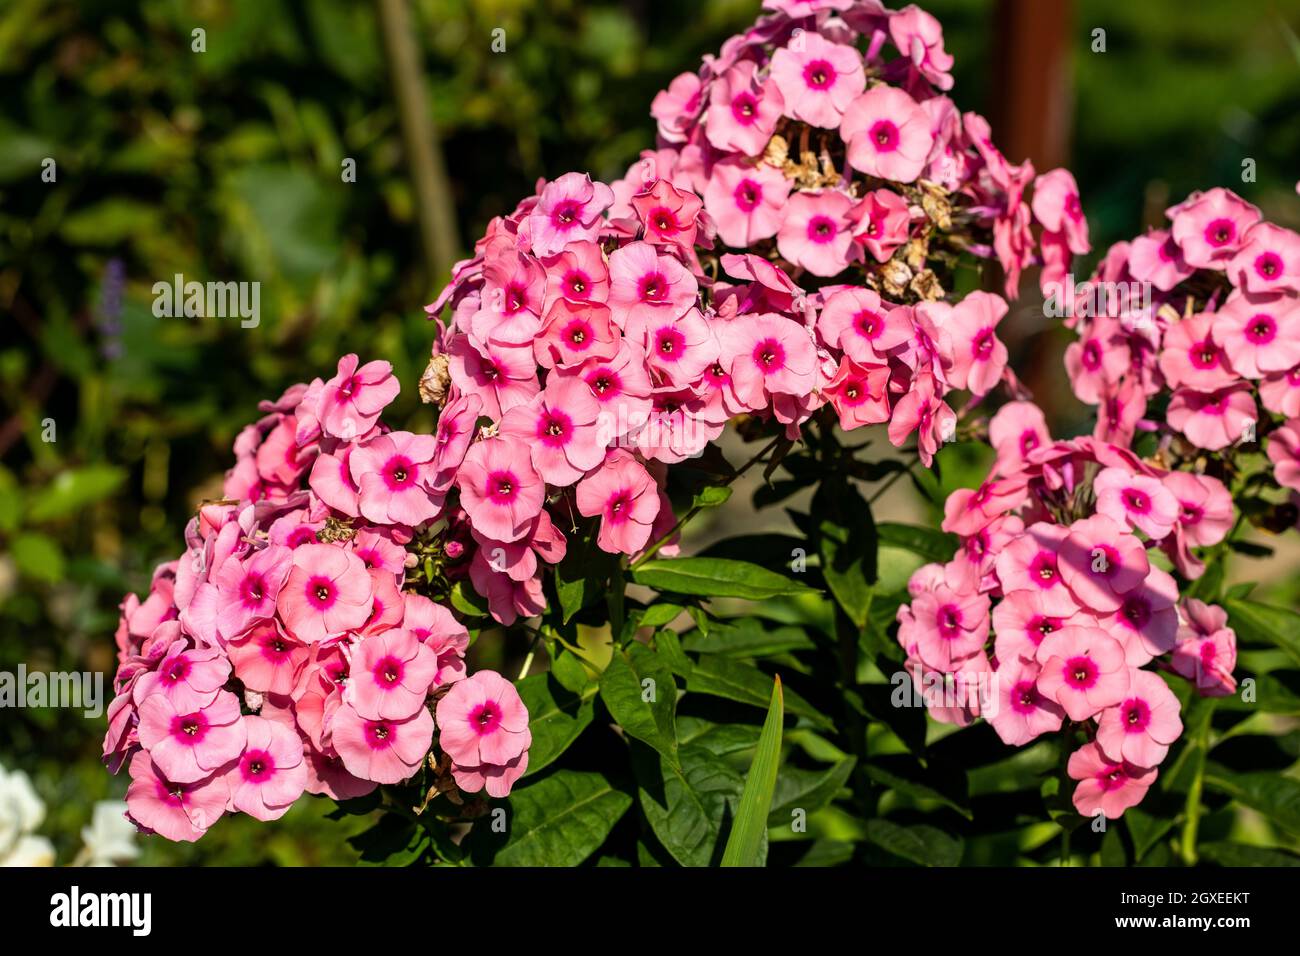 Flowering branch of pink phlox in the garden Stock Photo